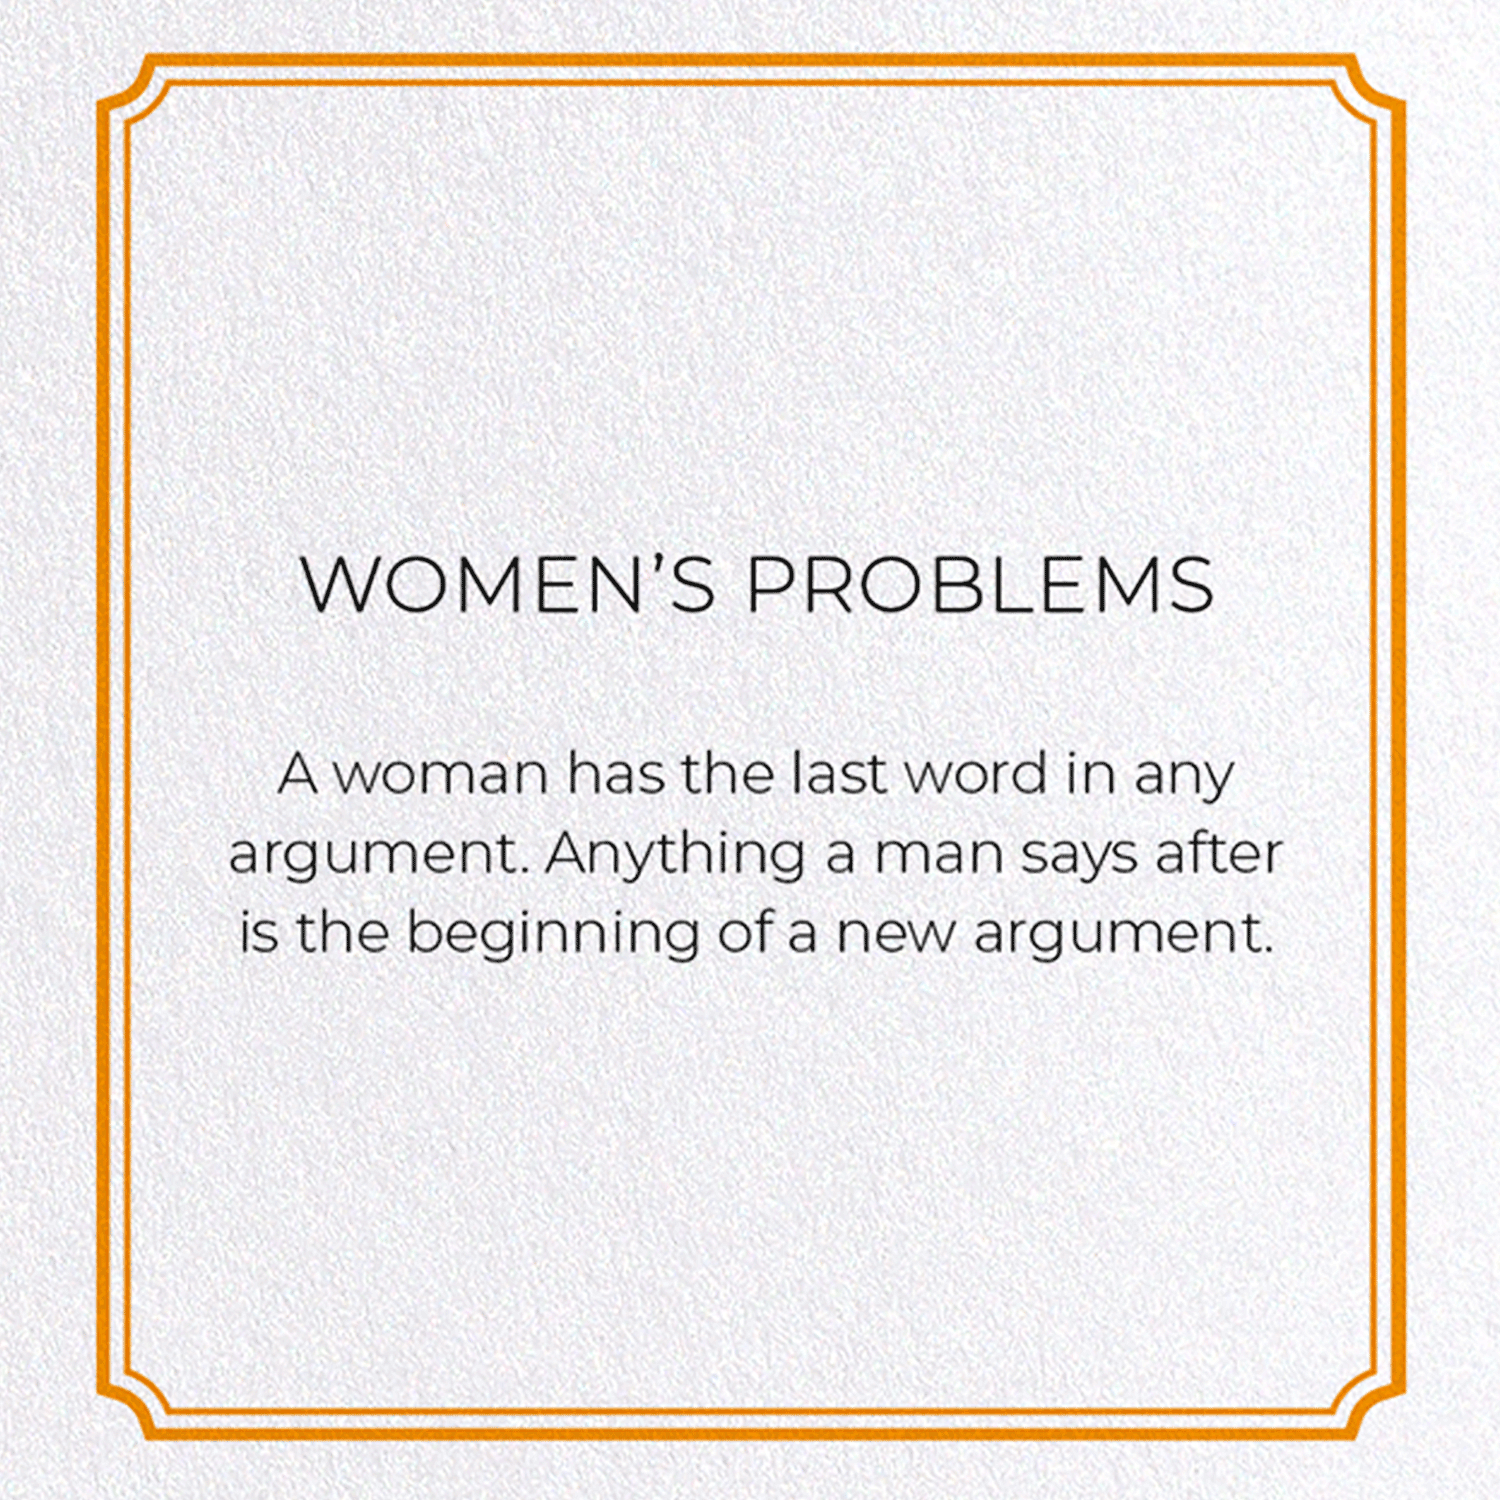 WOMEN'S PROBLEMS